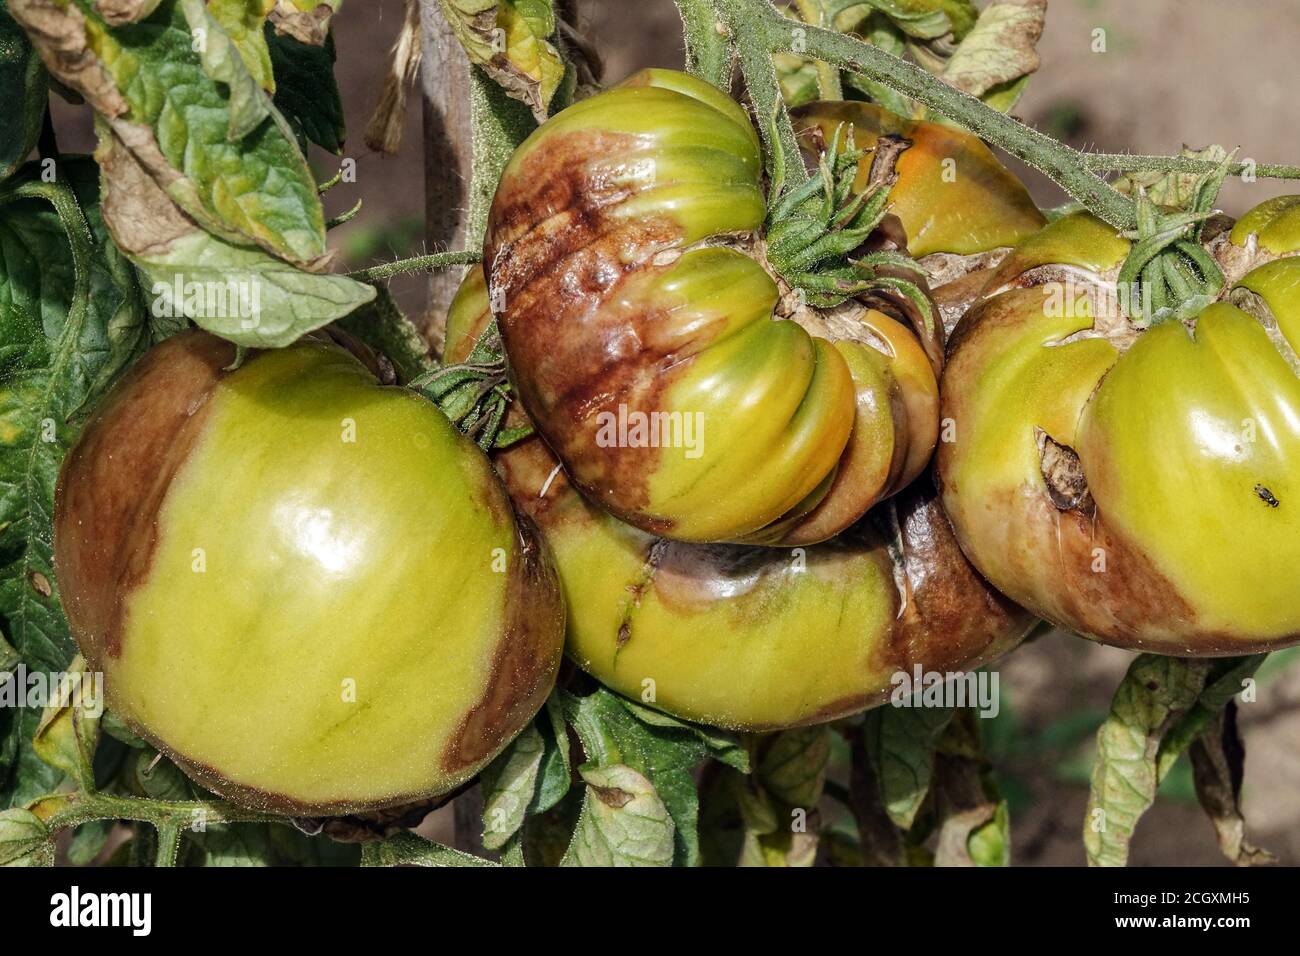 Phytophthora infestans Enfermedades del tomate blight tomates manchas marrones Solanum lycopersicum planta Foto de stock